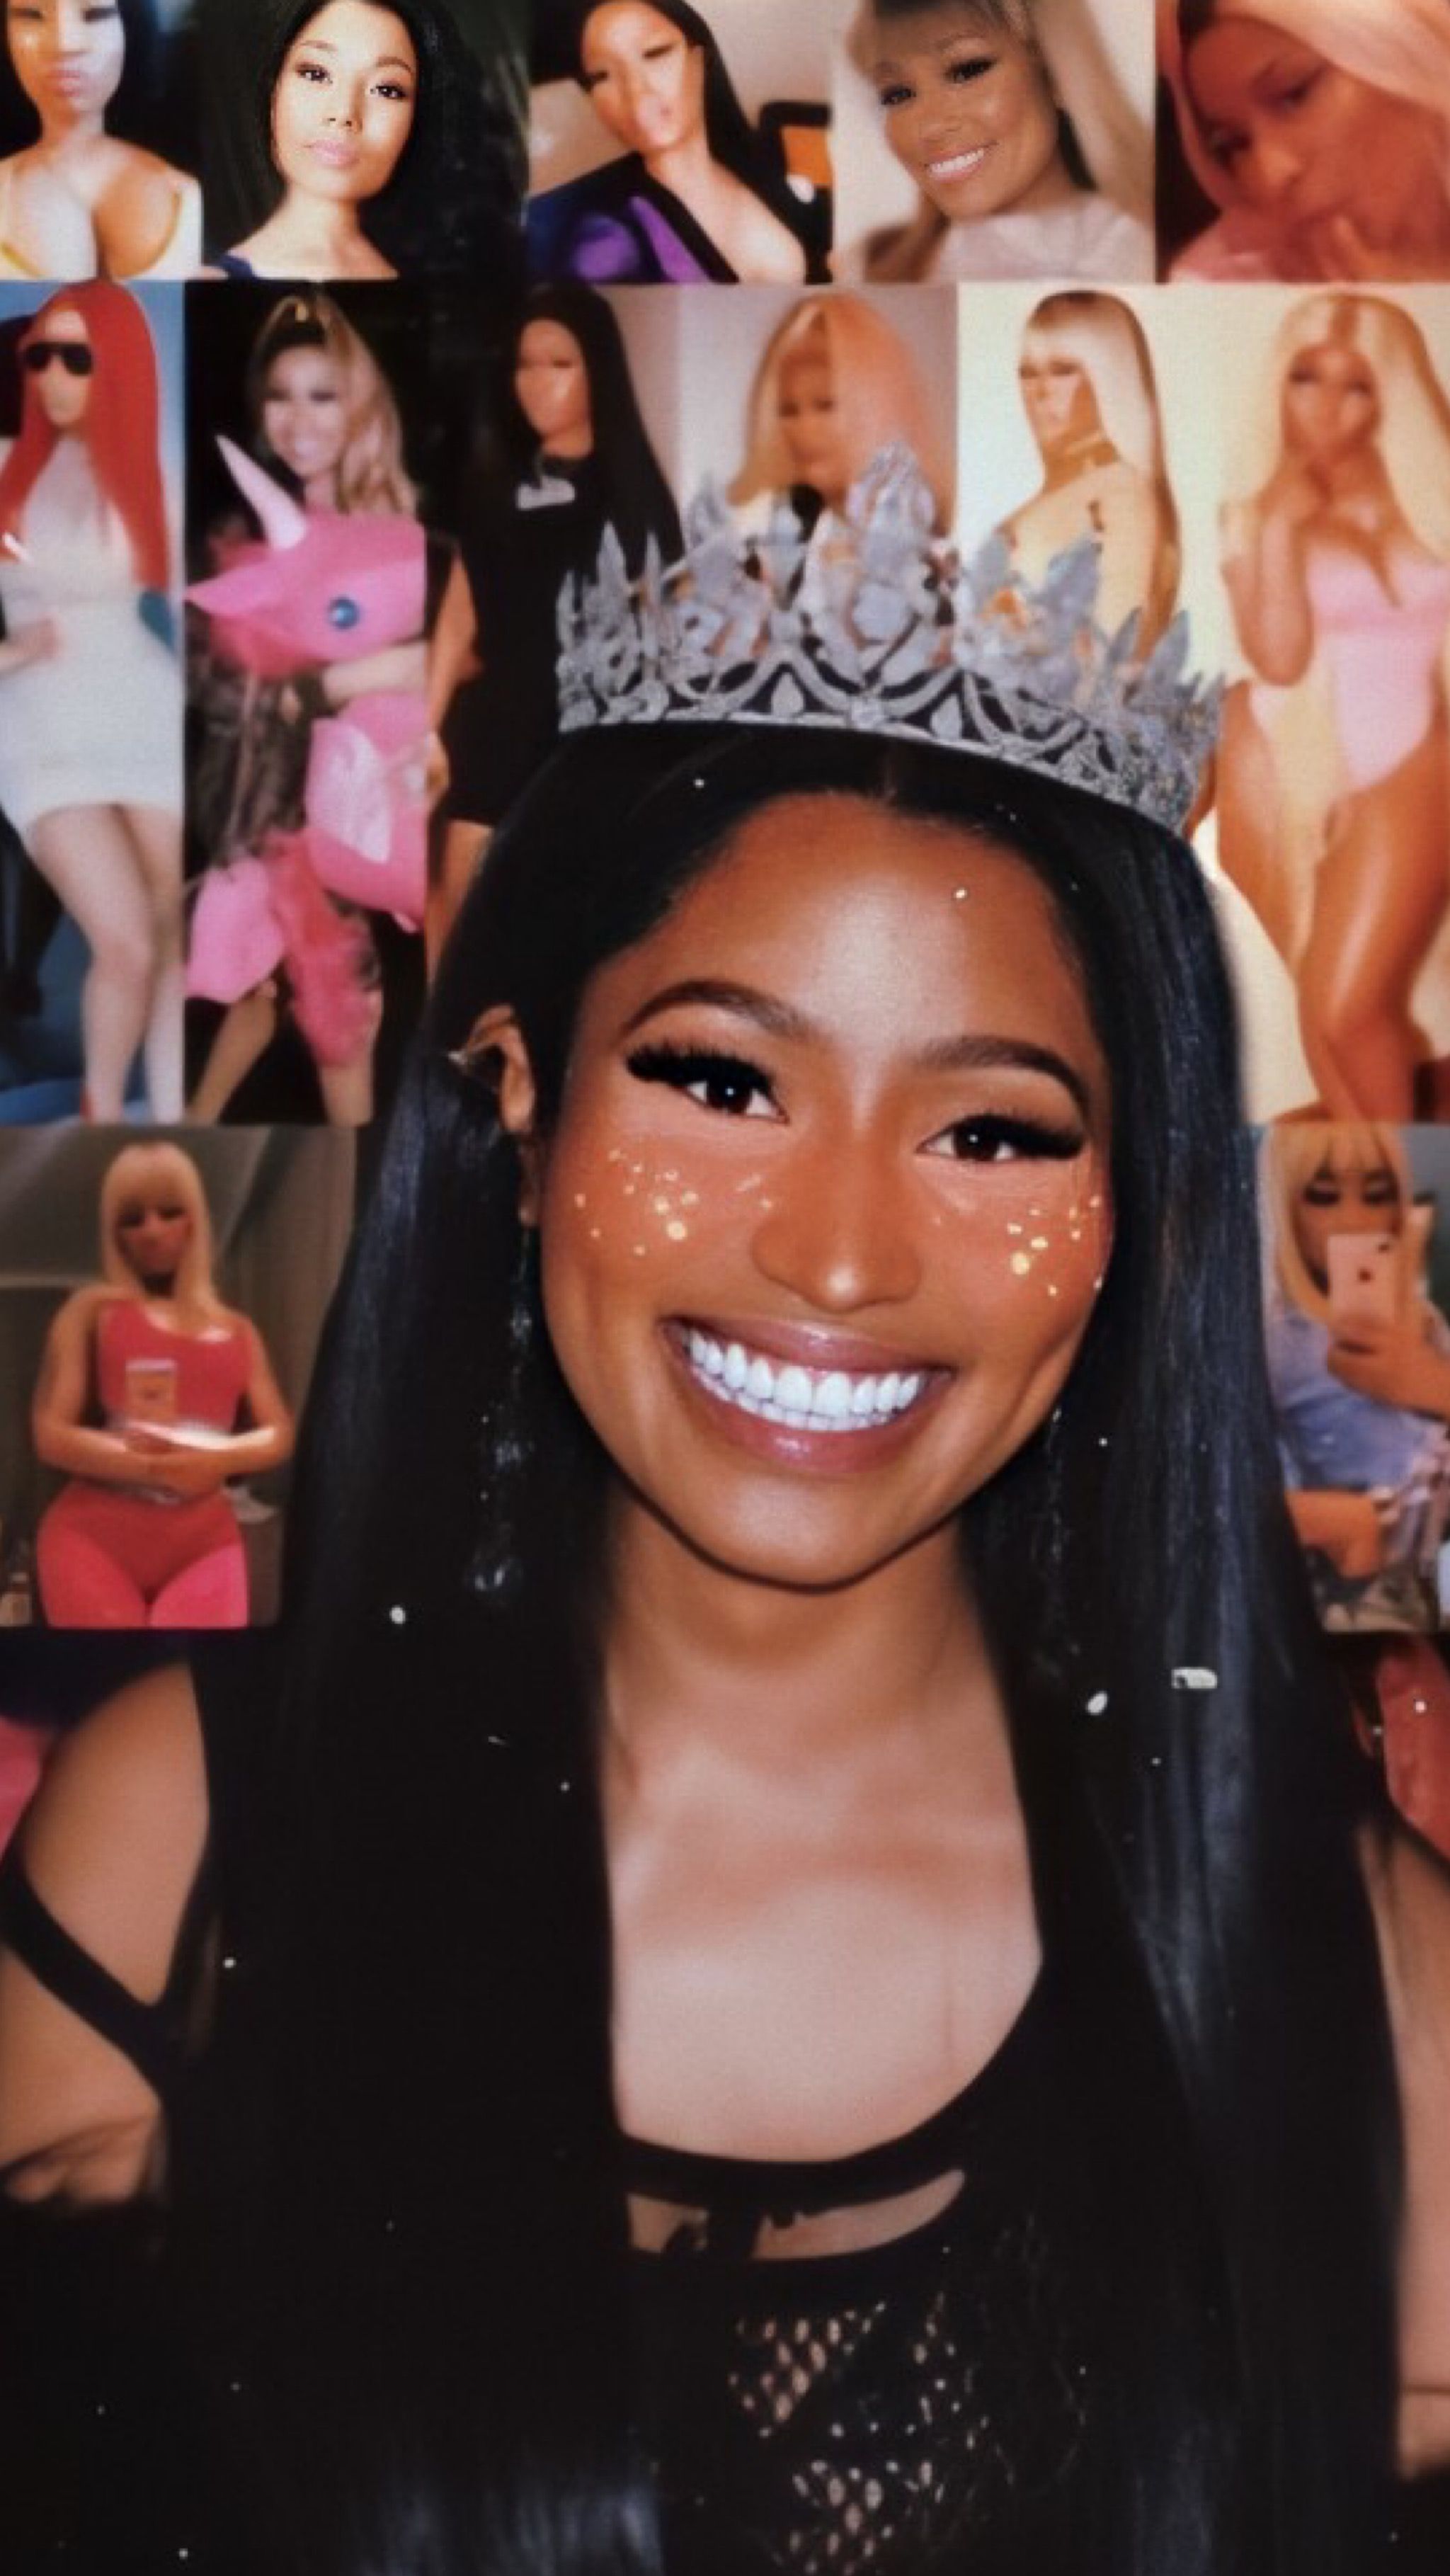 Nicki Minaj Wallpaper. Nicki minaj wallpaper, Nicki minaj photo, Celebrity wallpaper